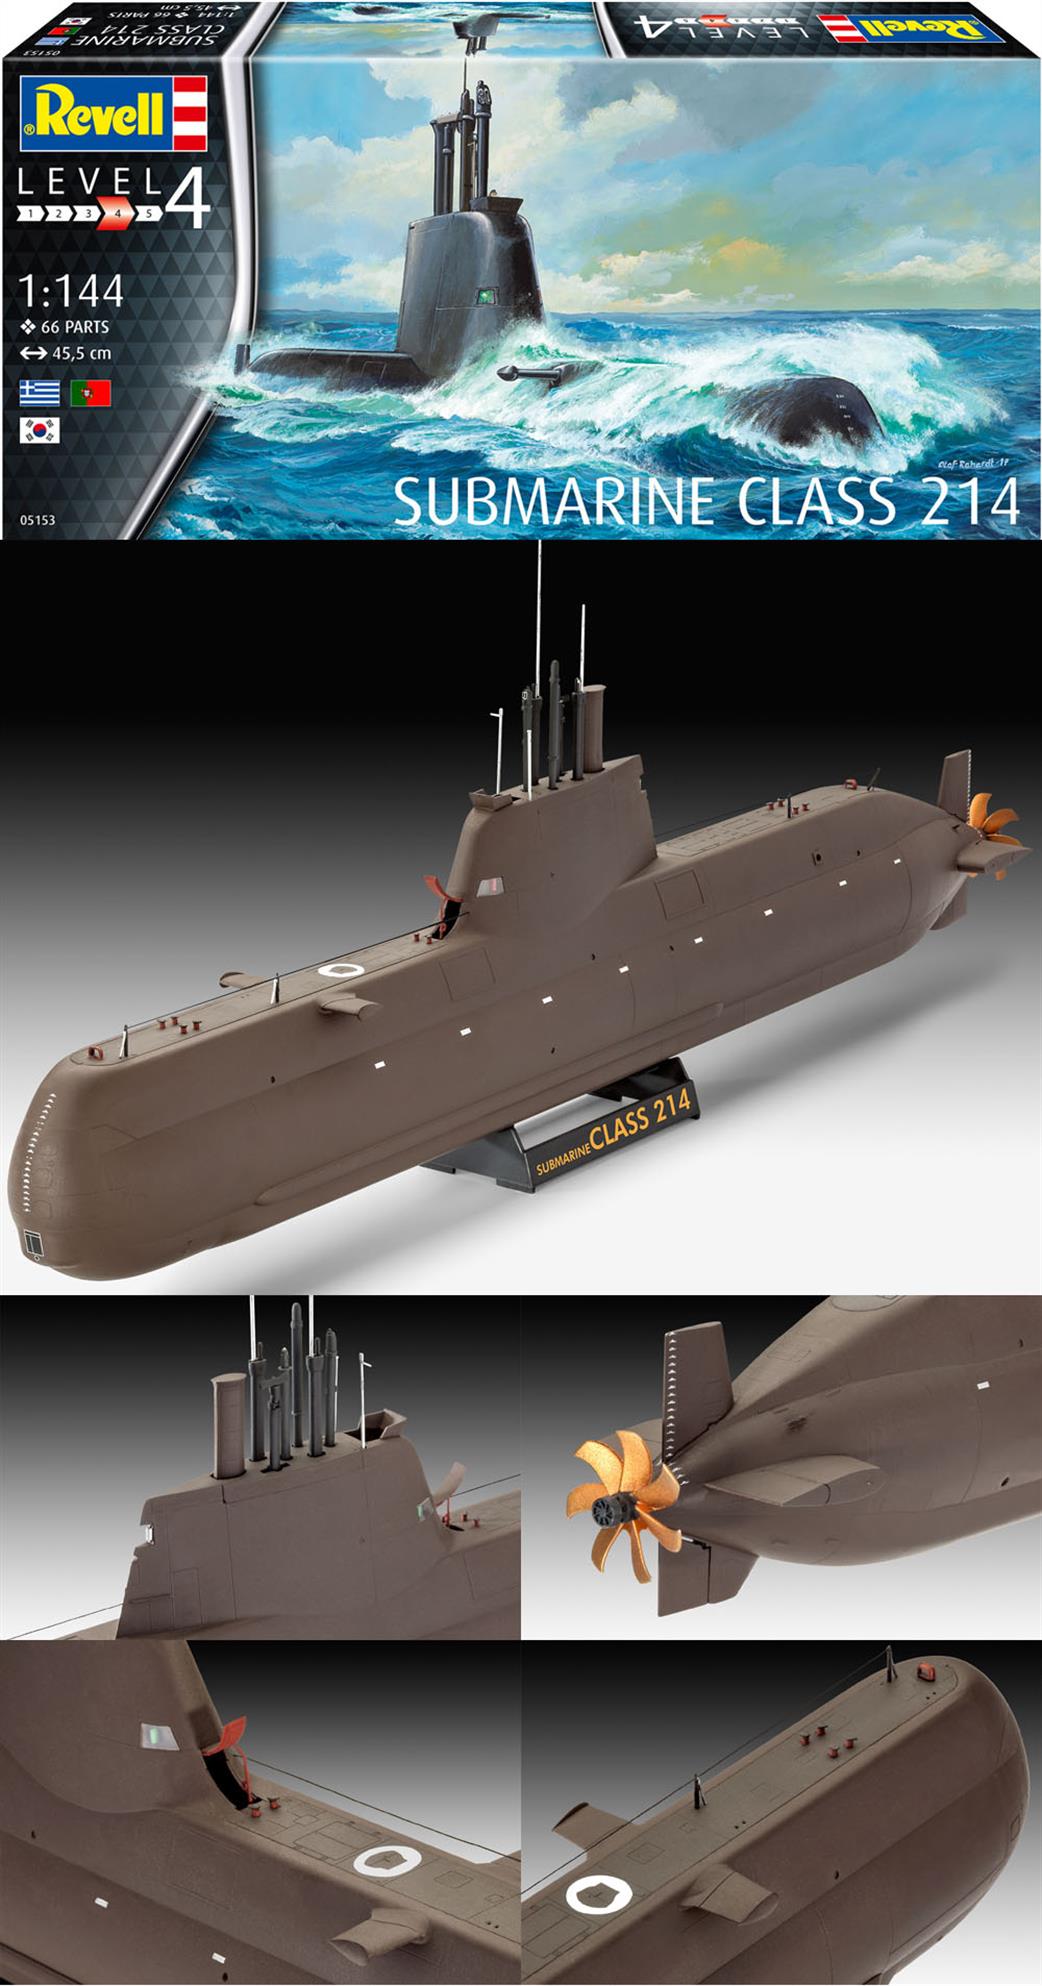 Revell 05153 Submarine Class 214 Plastic Kit 1/144